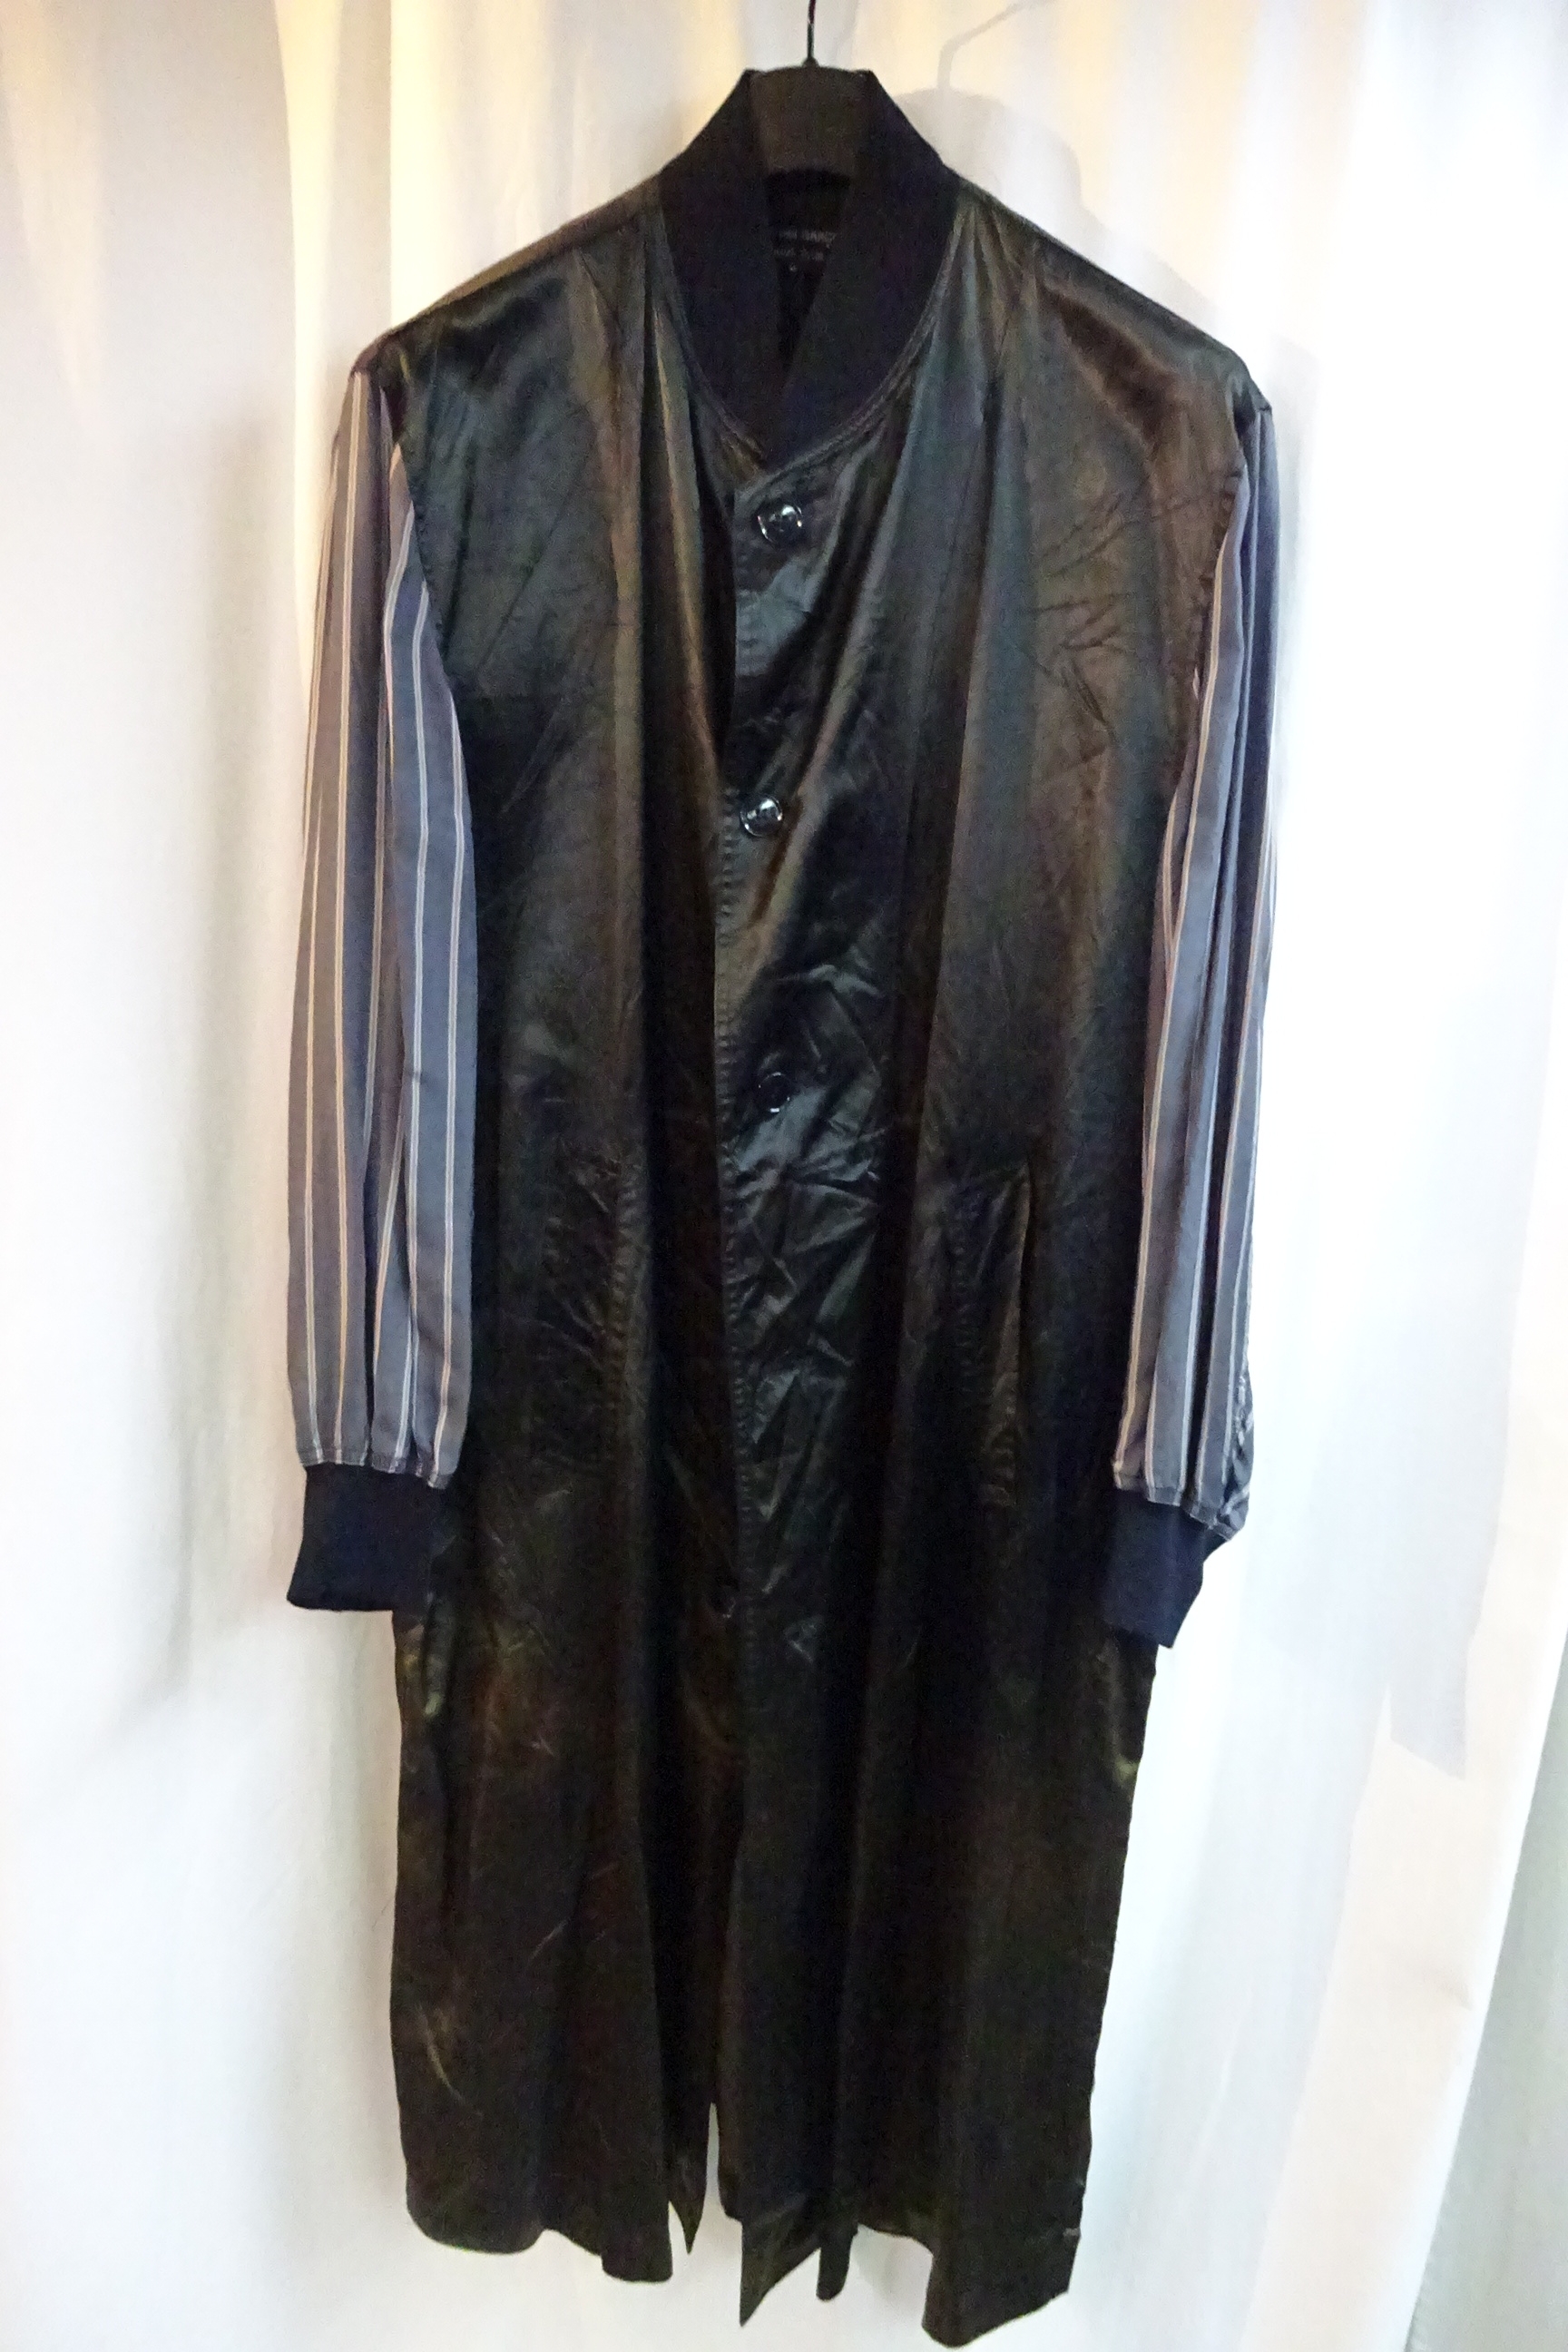 LA GRANDE LUE オーナー 『俺にも言わせろ！』 画像のコートは80年代のコムデギャルソンのコレクションスタッフコートです